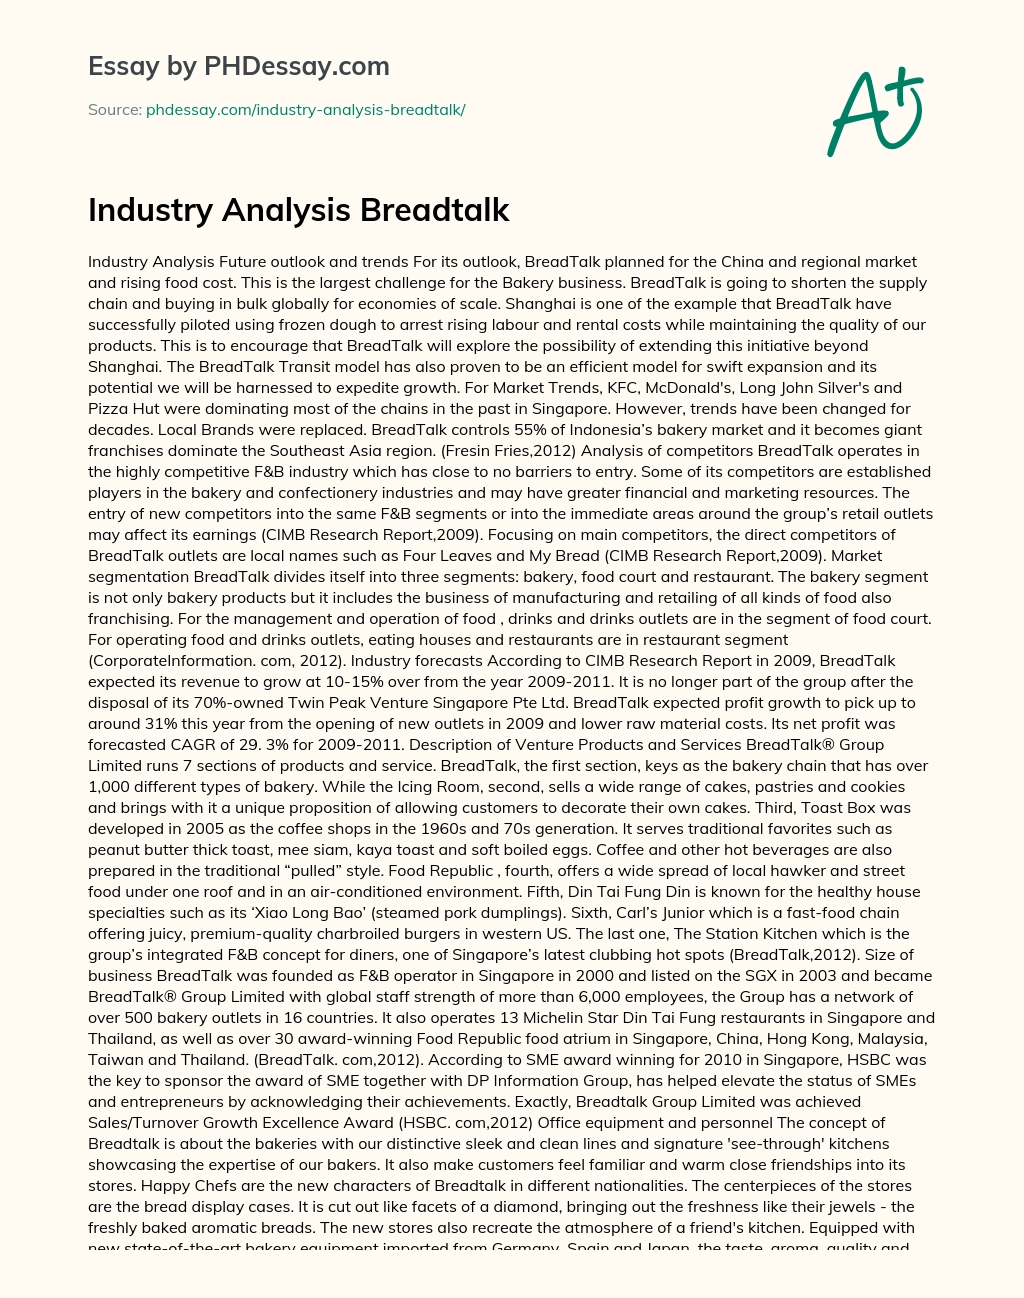 Industry Analysis Breadtalk essay